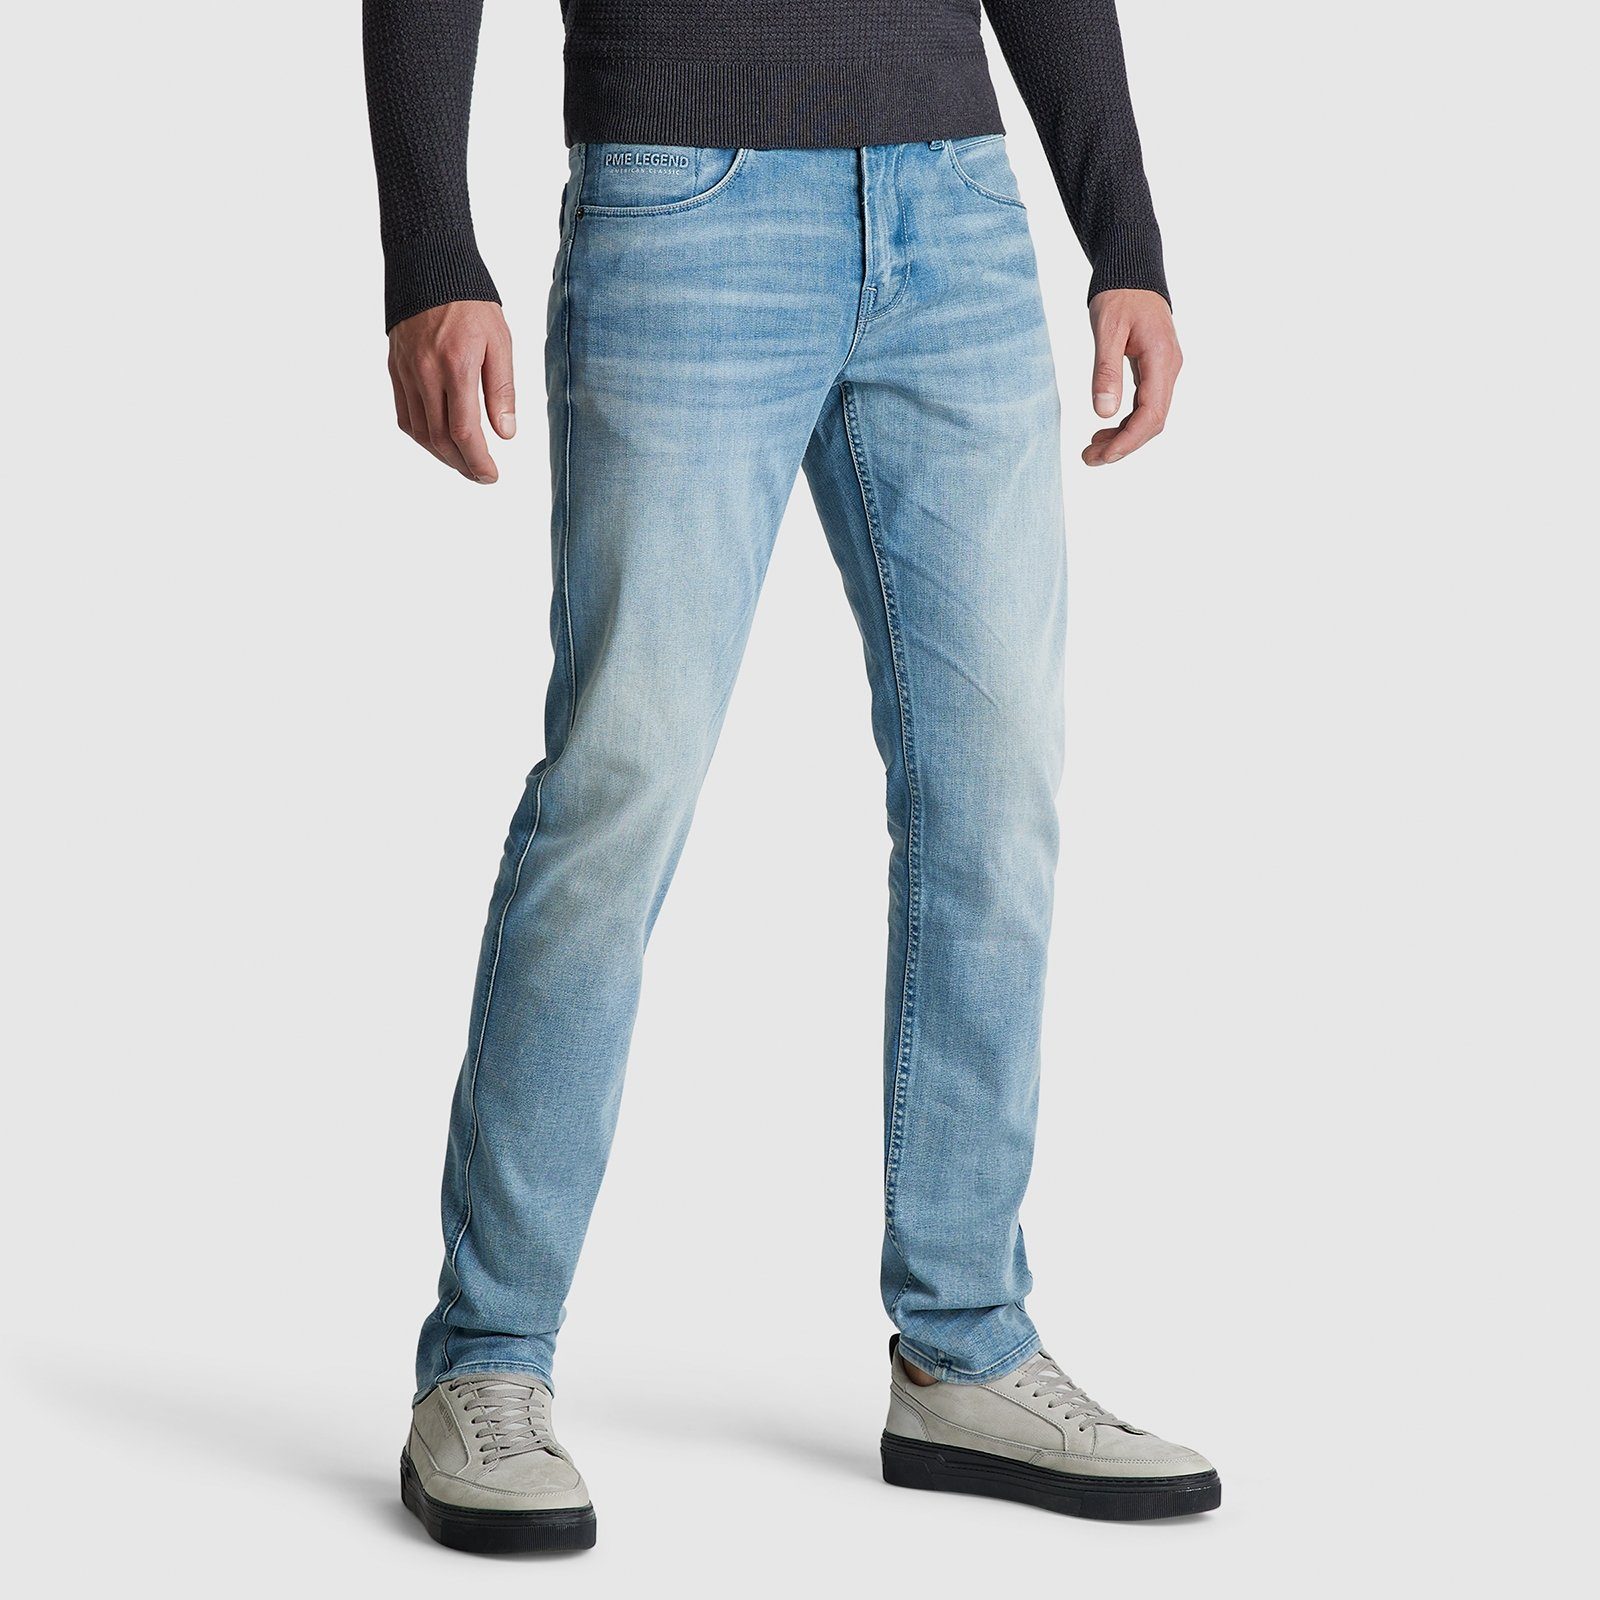 PME LEGEND NIGHTFLIGHT LEGEND JEANS 5-Pocket-Jeans PME BRIGH